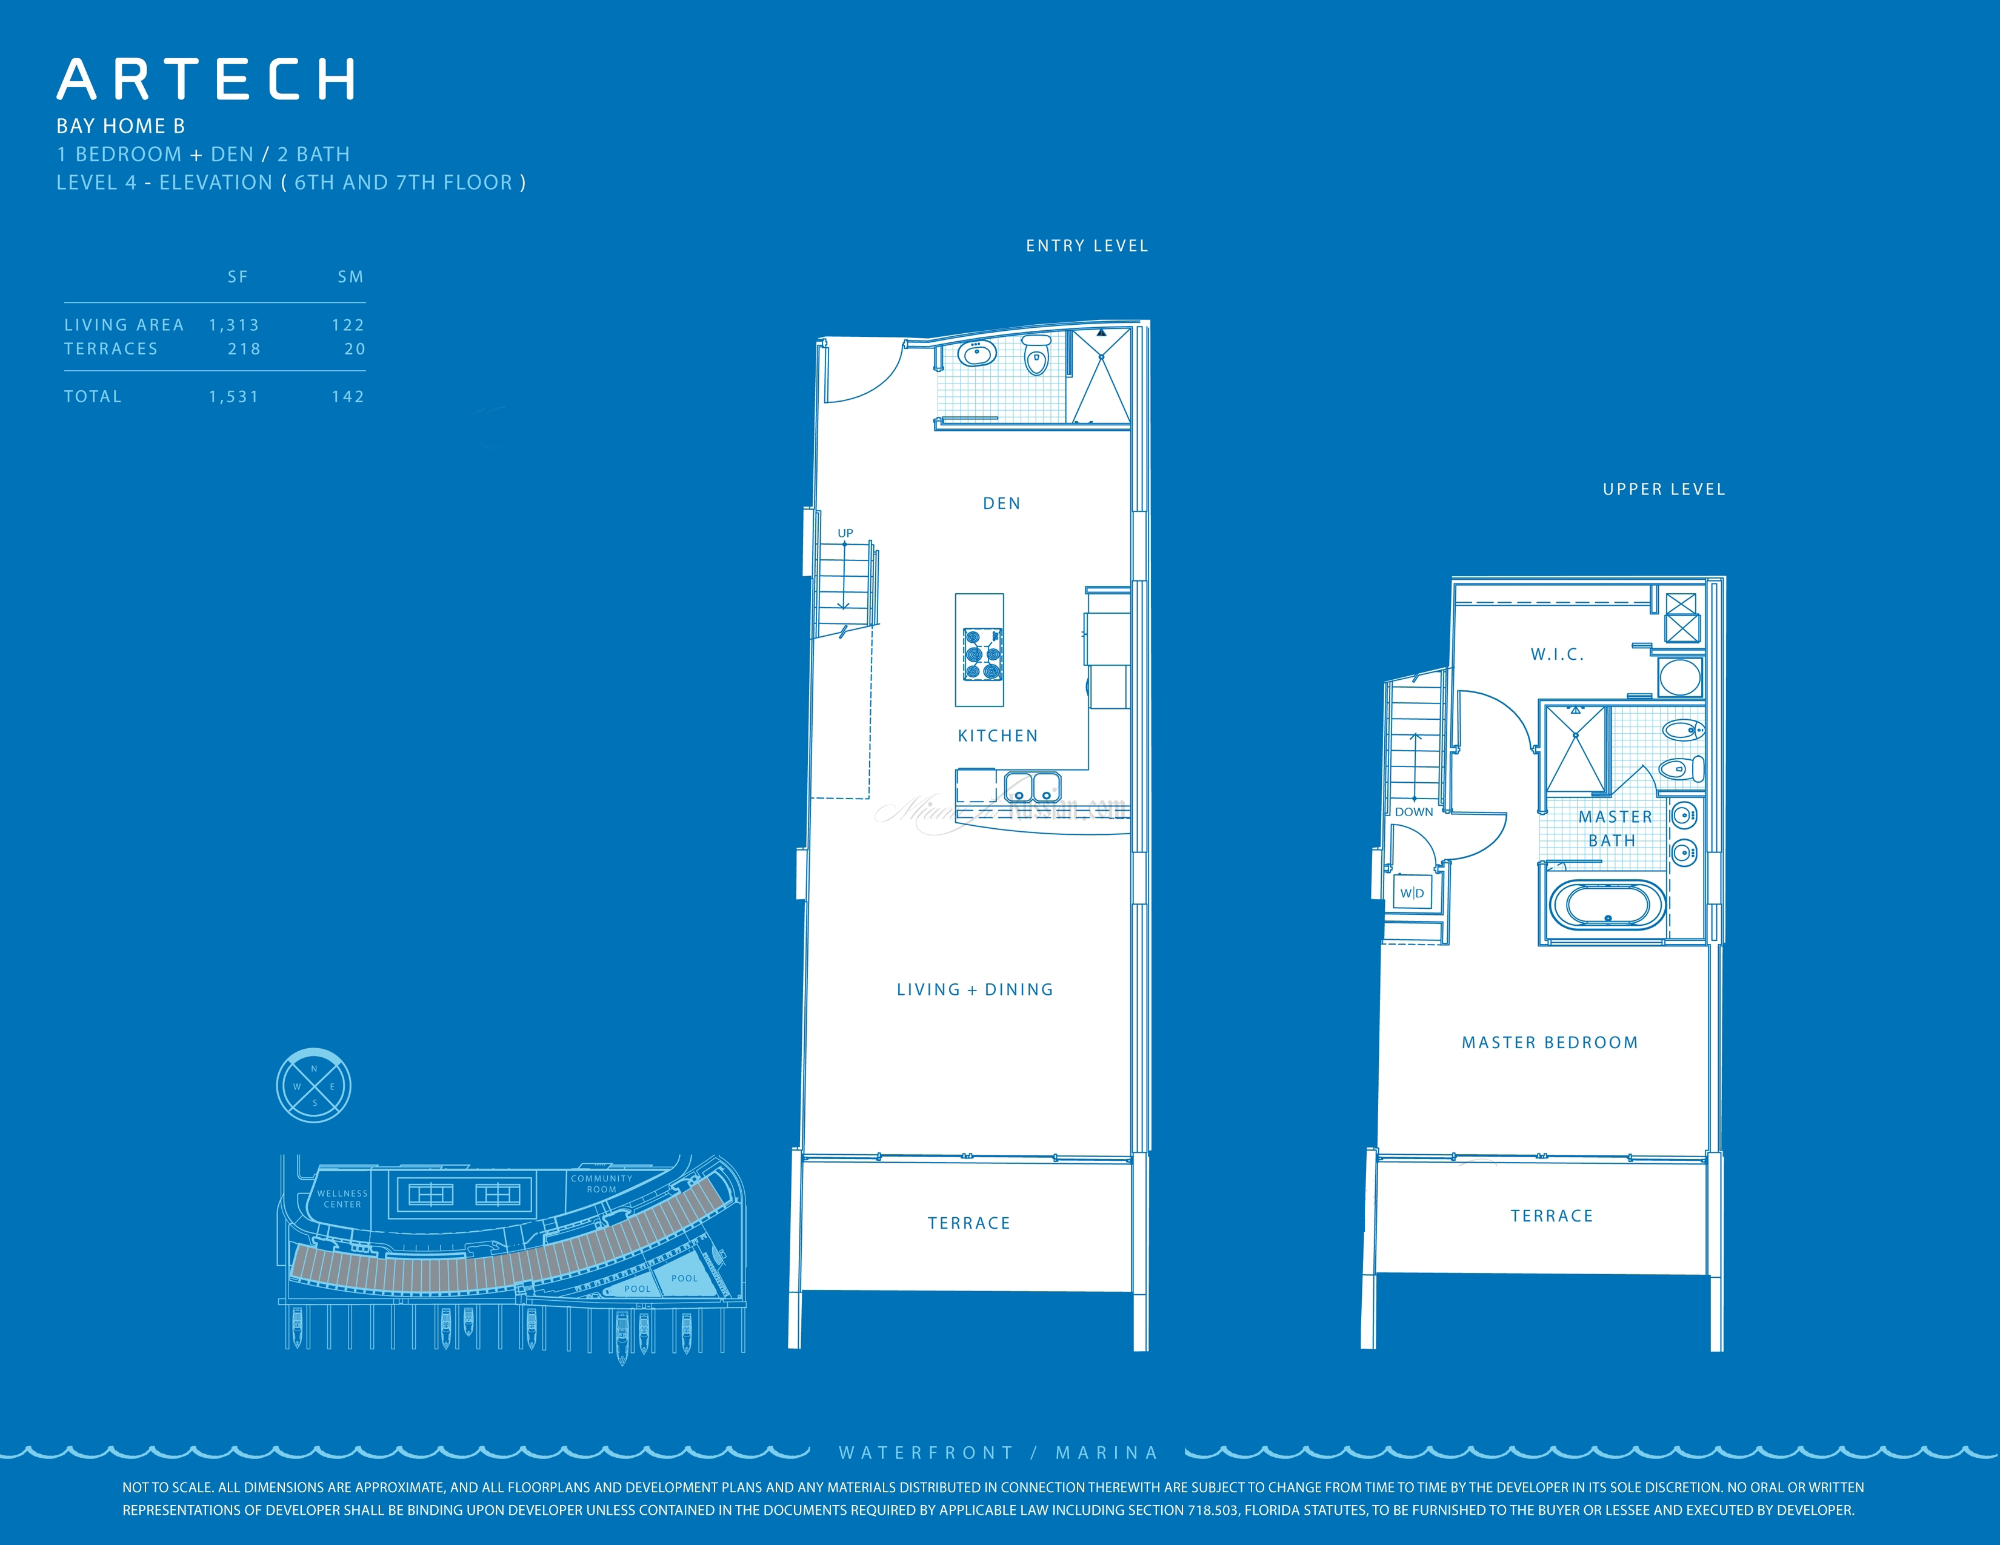 Artech Aventura Bay Home B Floor Plan